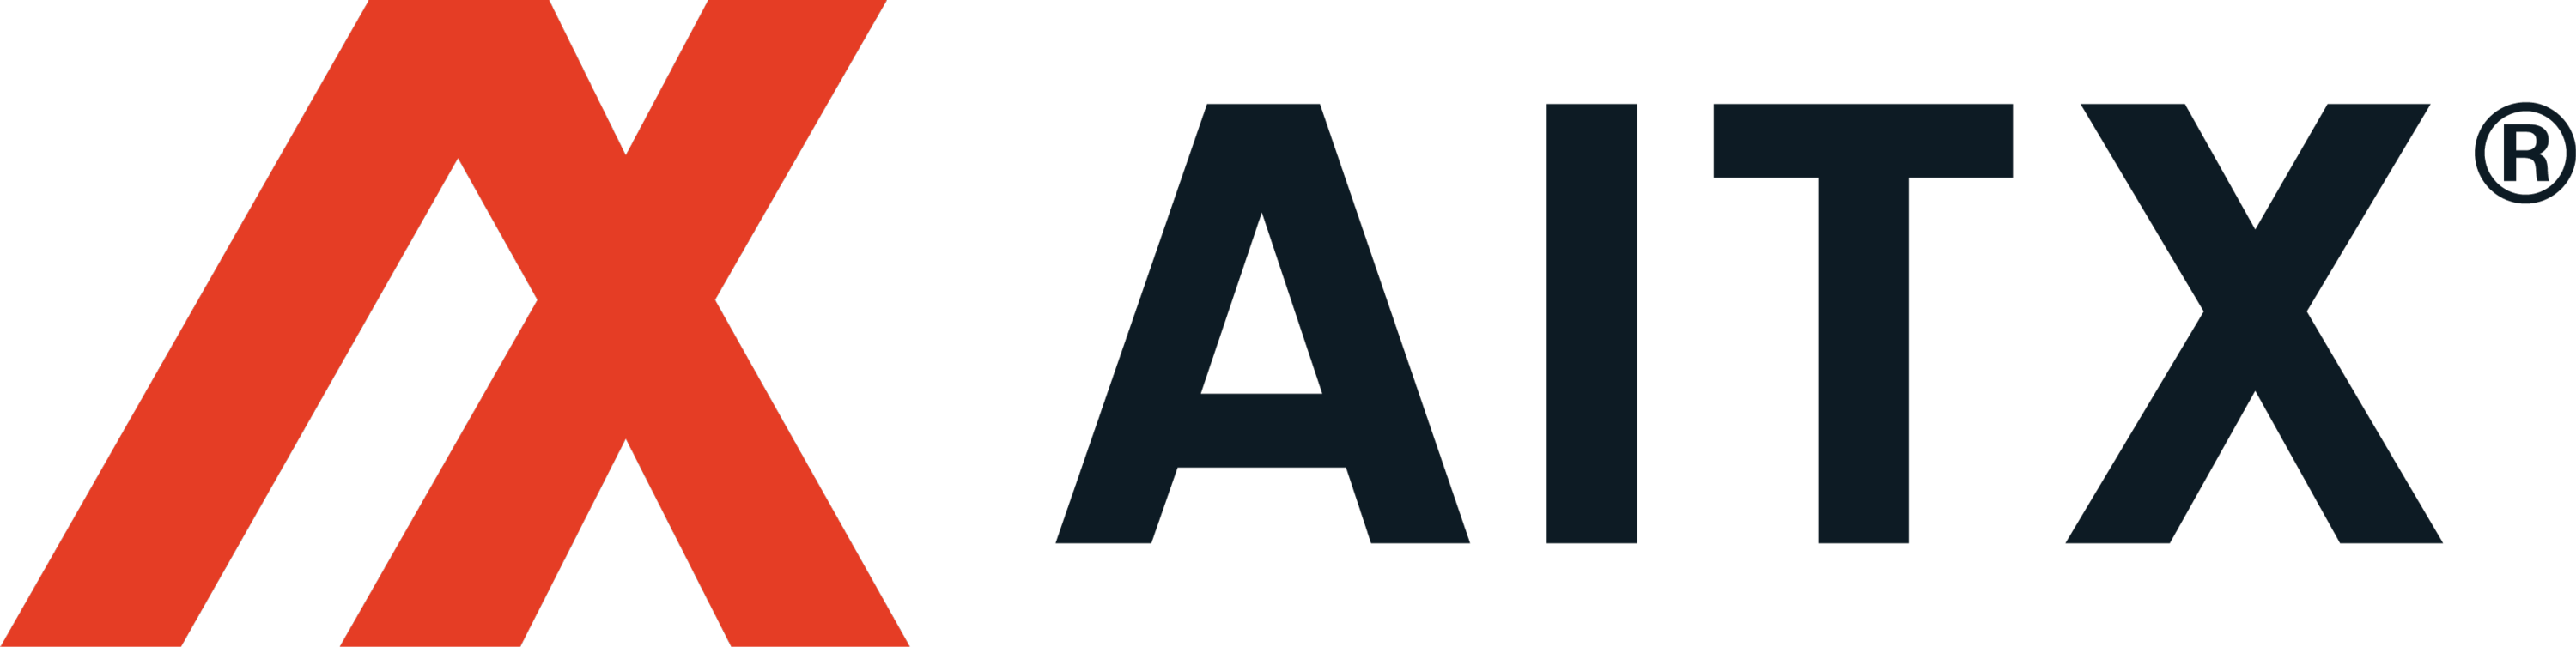 AITX Logo